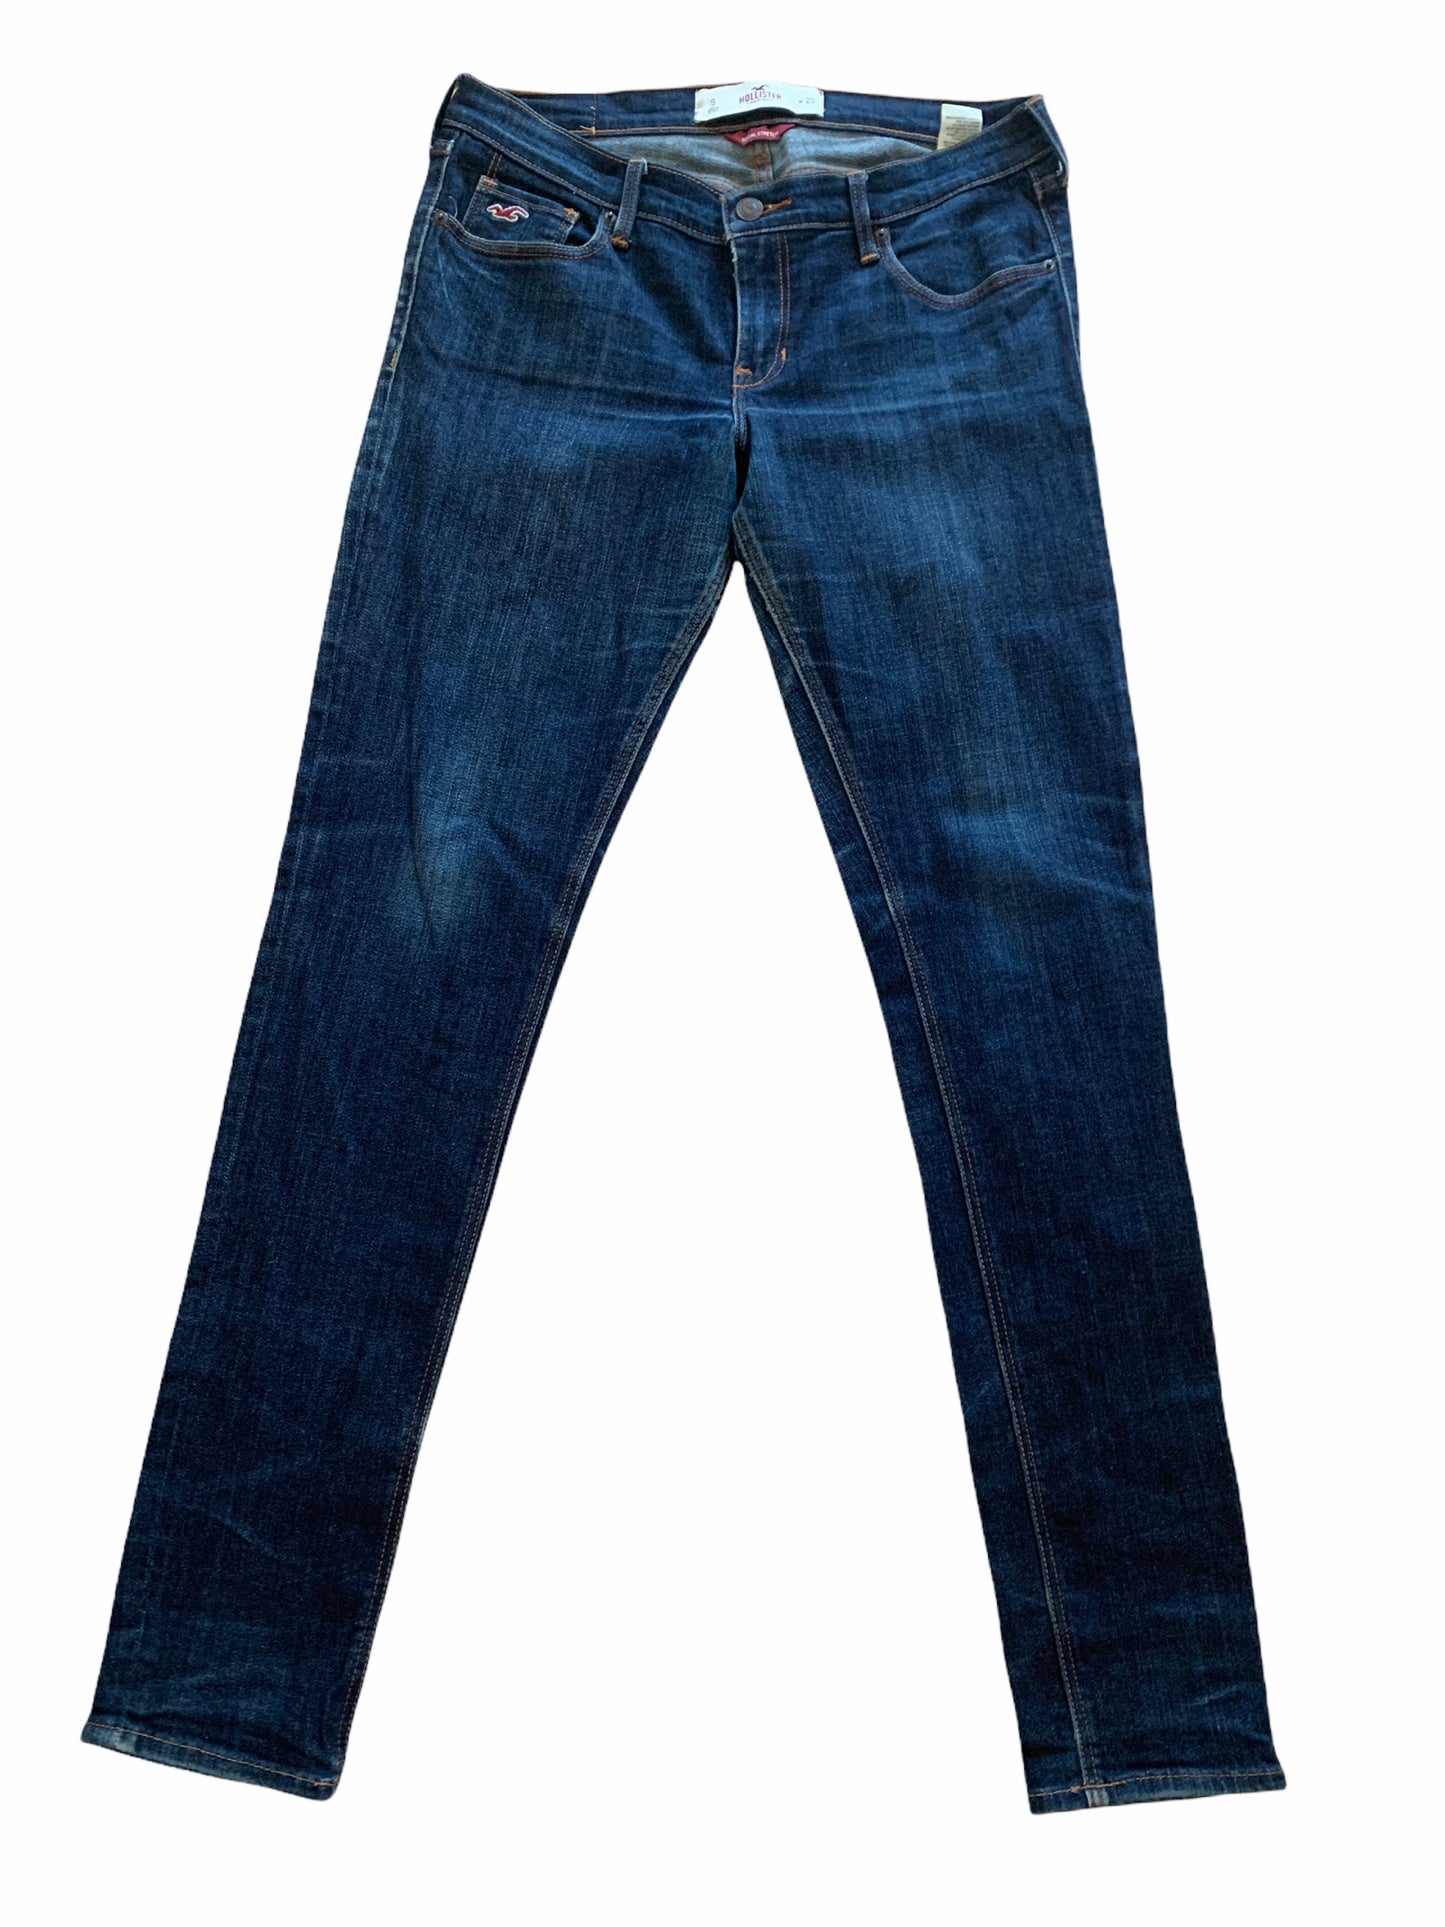 Hollister Jeans Pantaloni  donna S M W29